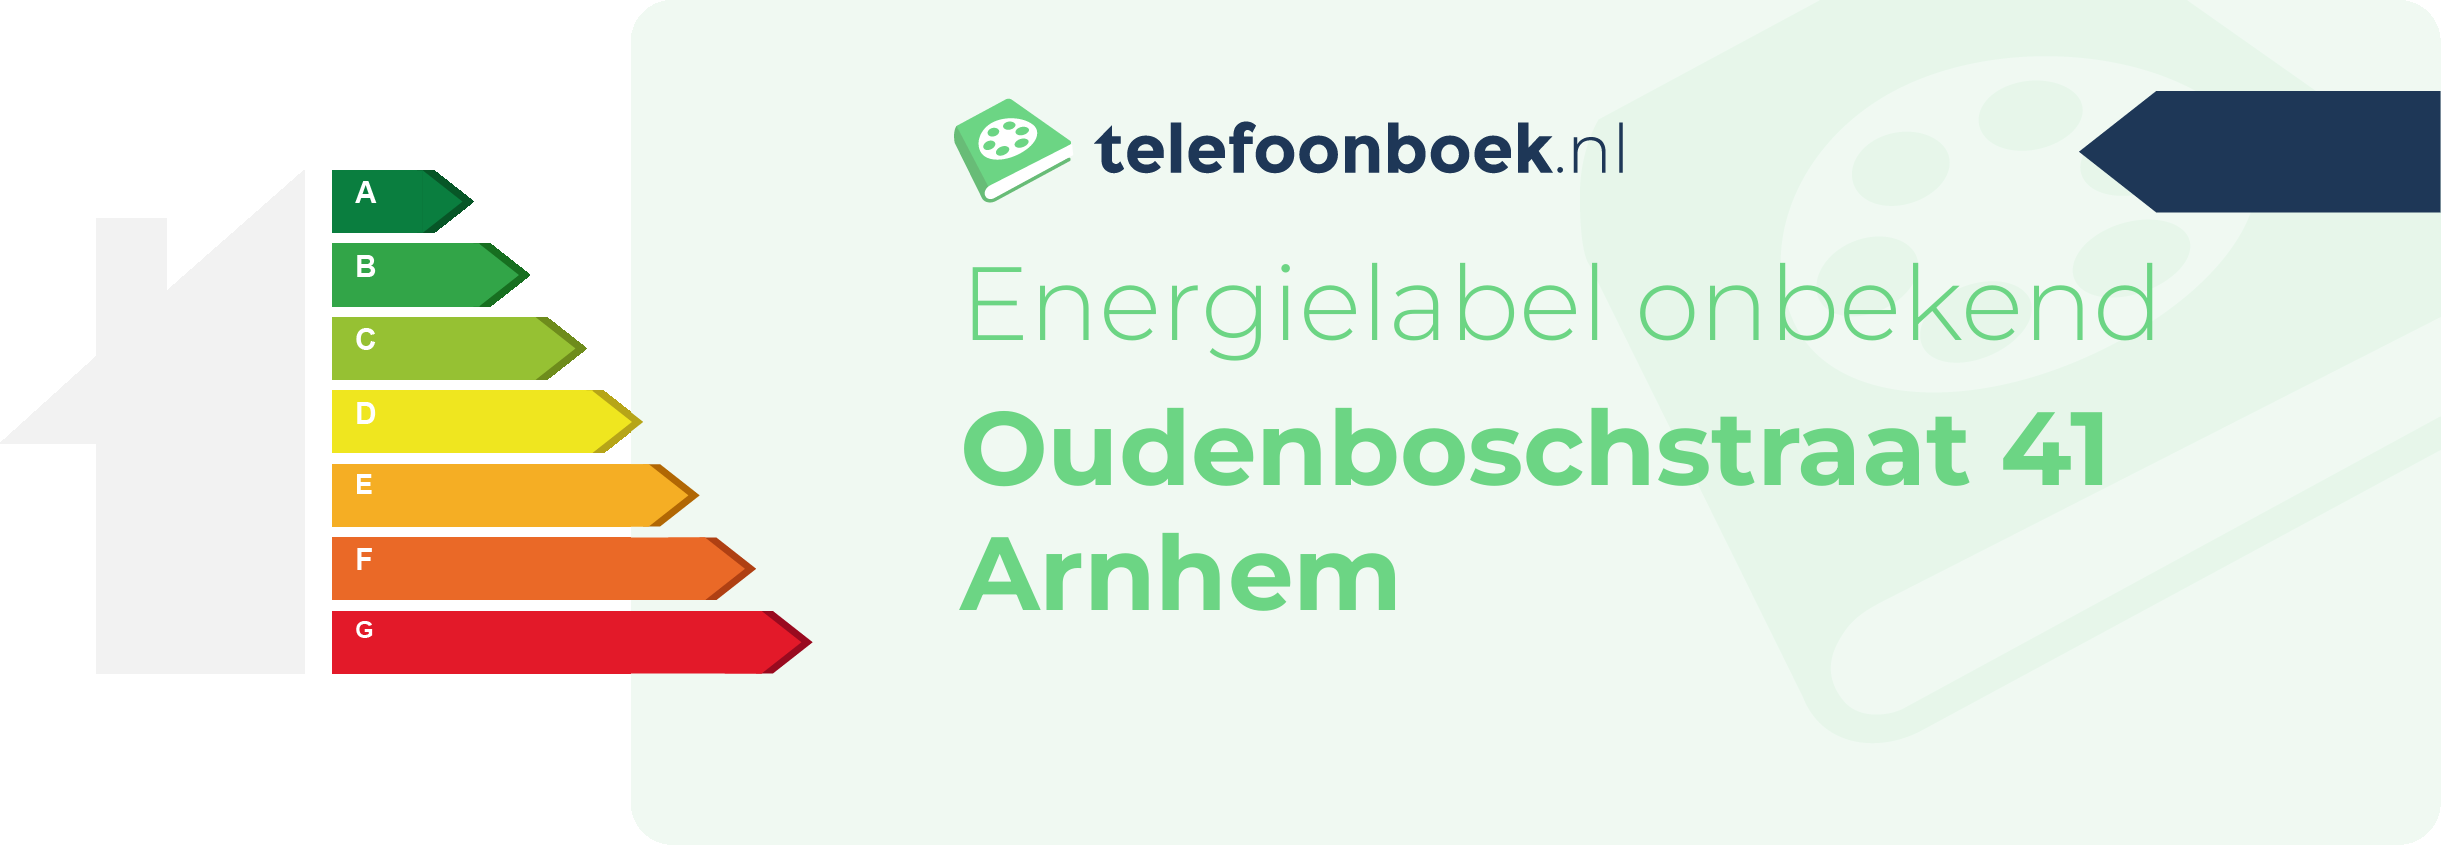 Energielabel Oudenboschstraat 41 Arnhem